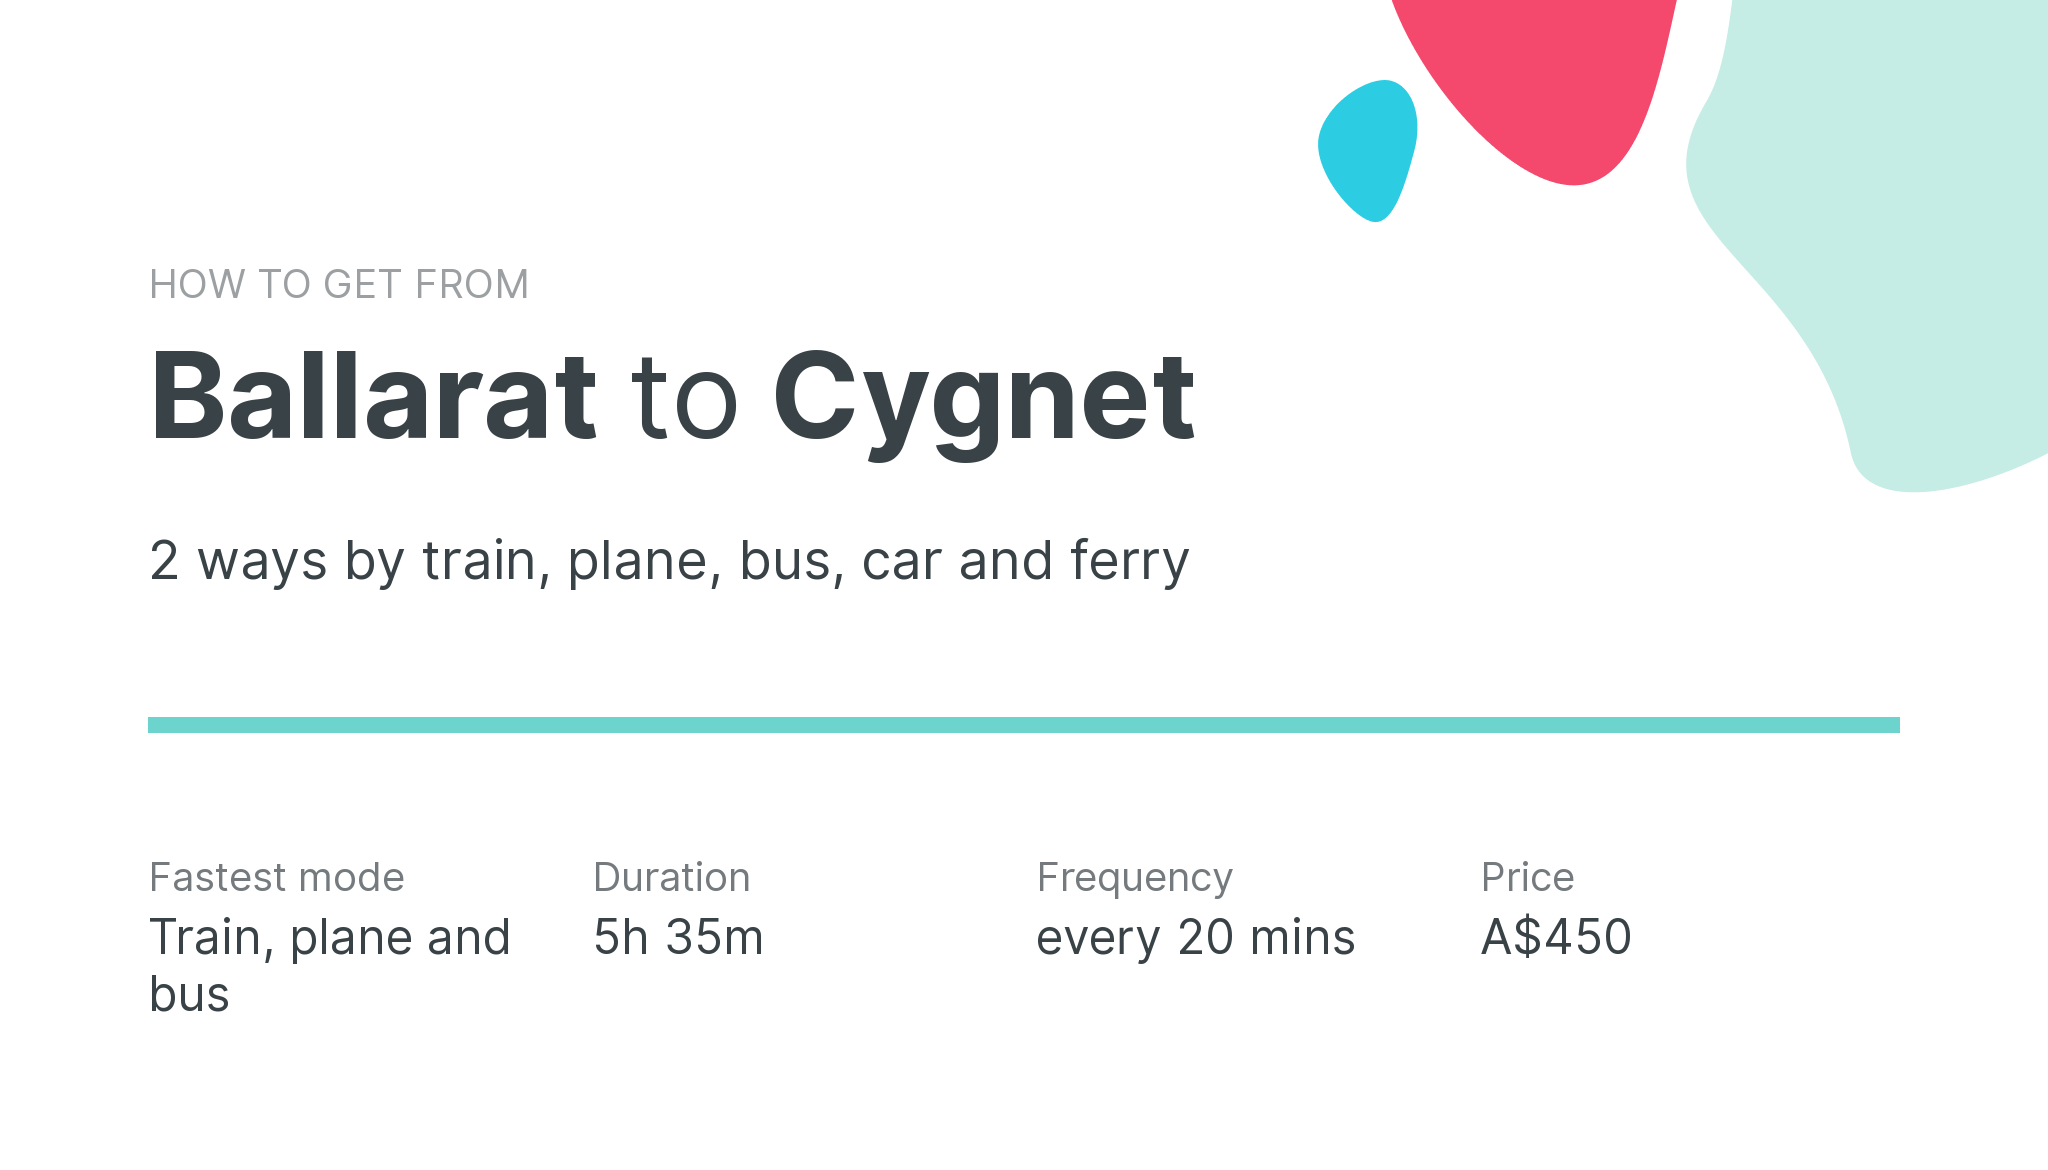 How do I get from Ballarat to Cygnet